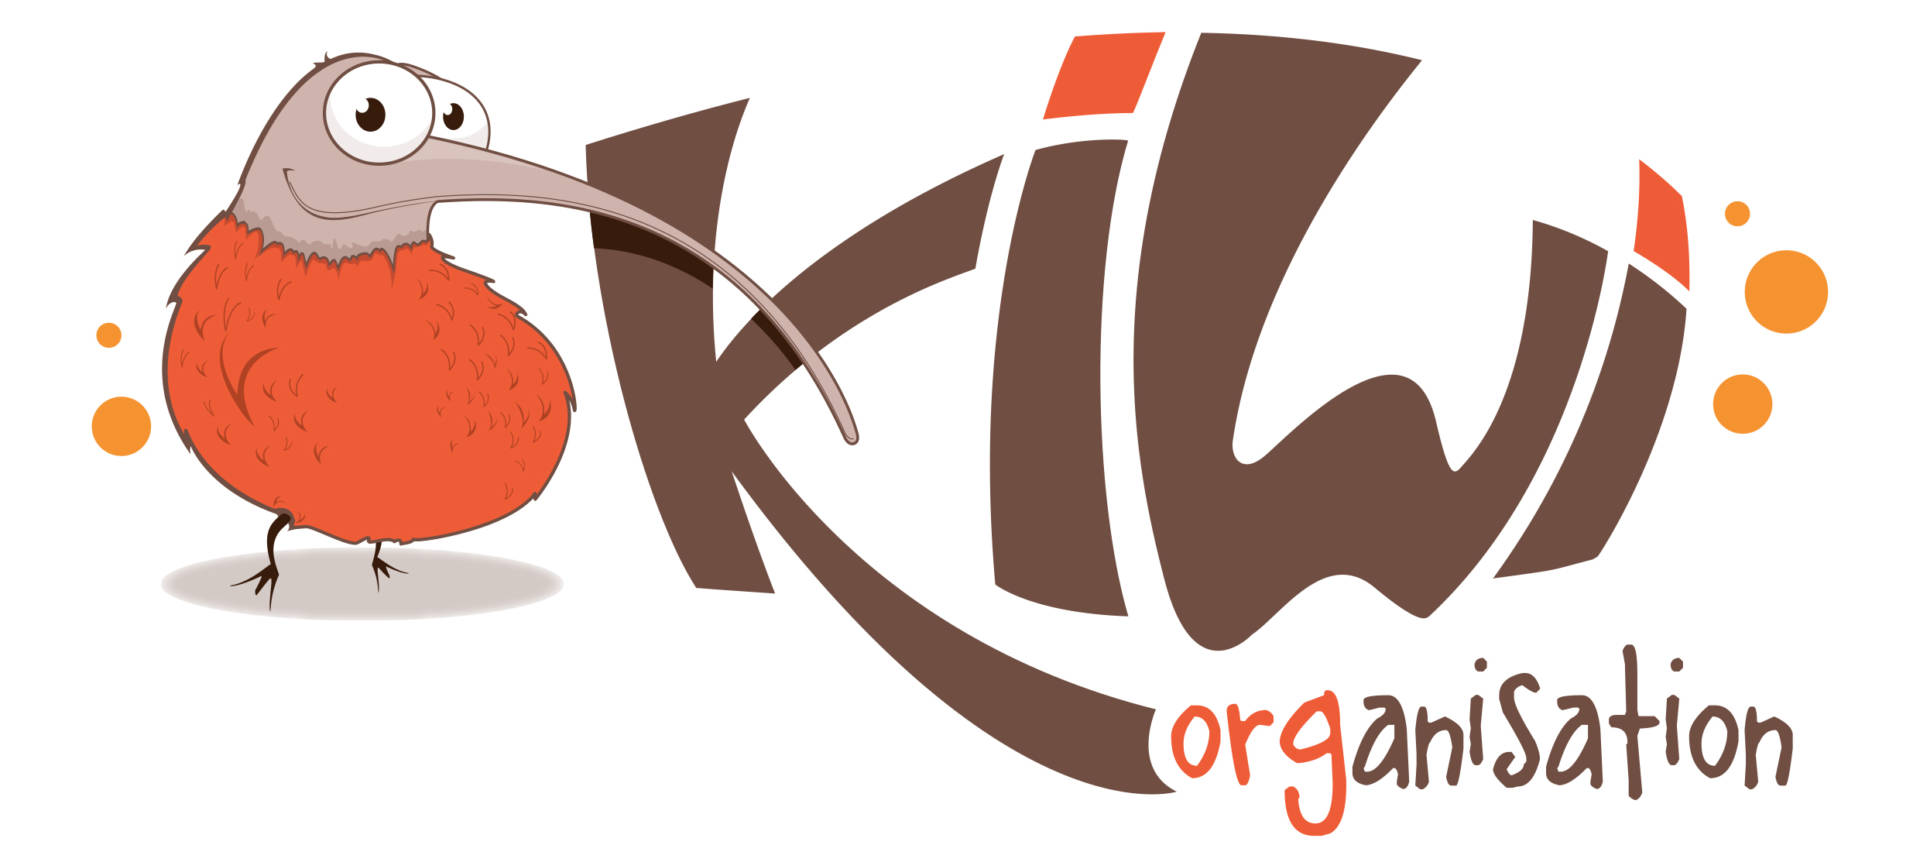 Kiwi Organisation